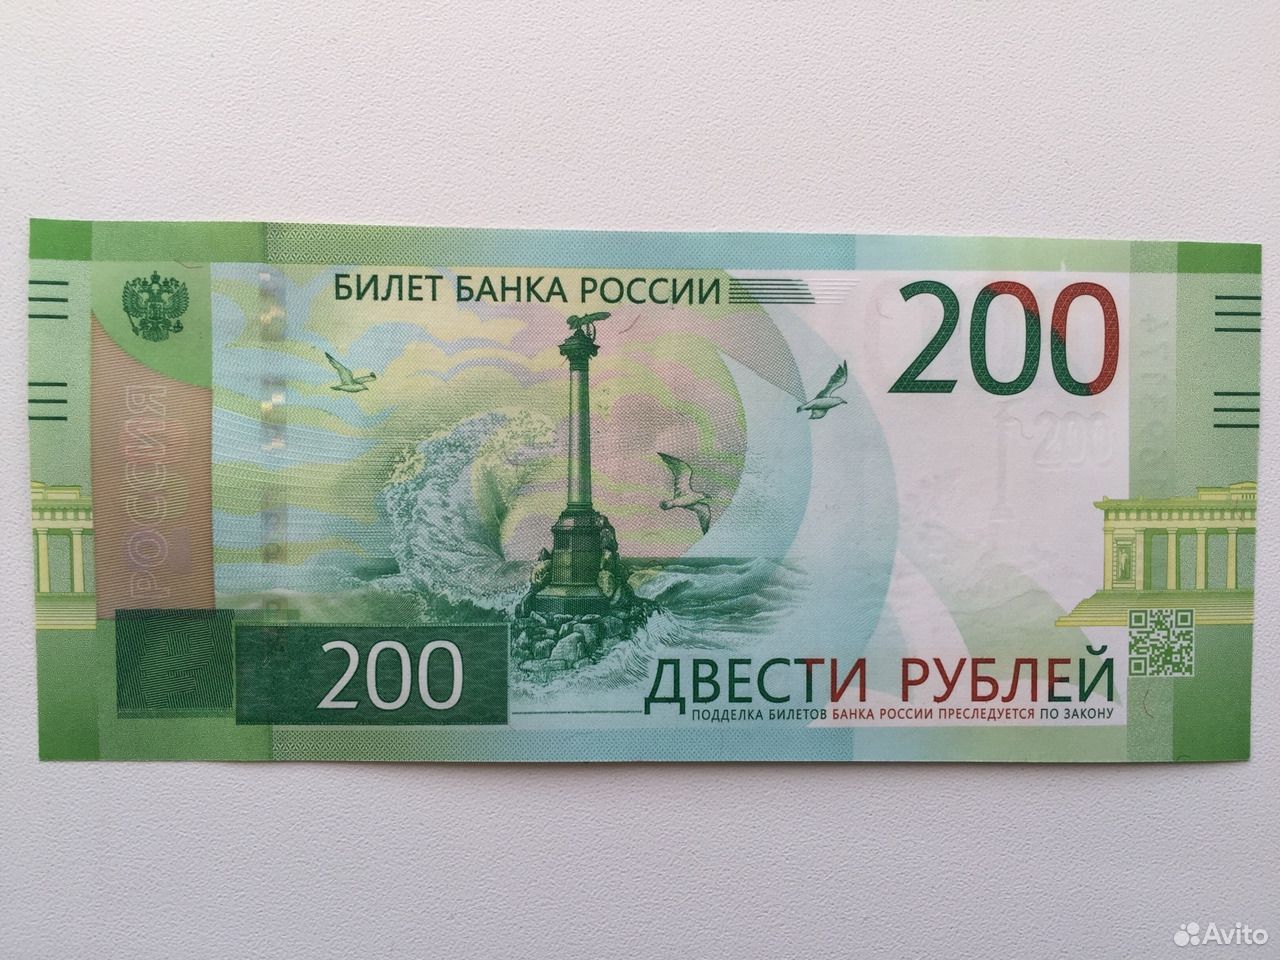 Оплатить 200 рублей. 200 Рублей 2017 года. 200 Рублей купюра 2017. Купюра 200 рублей 2017 года. 200 Рублей банкнота.